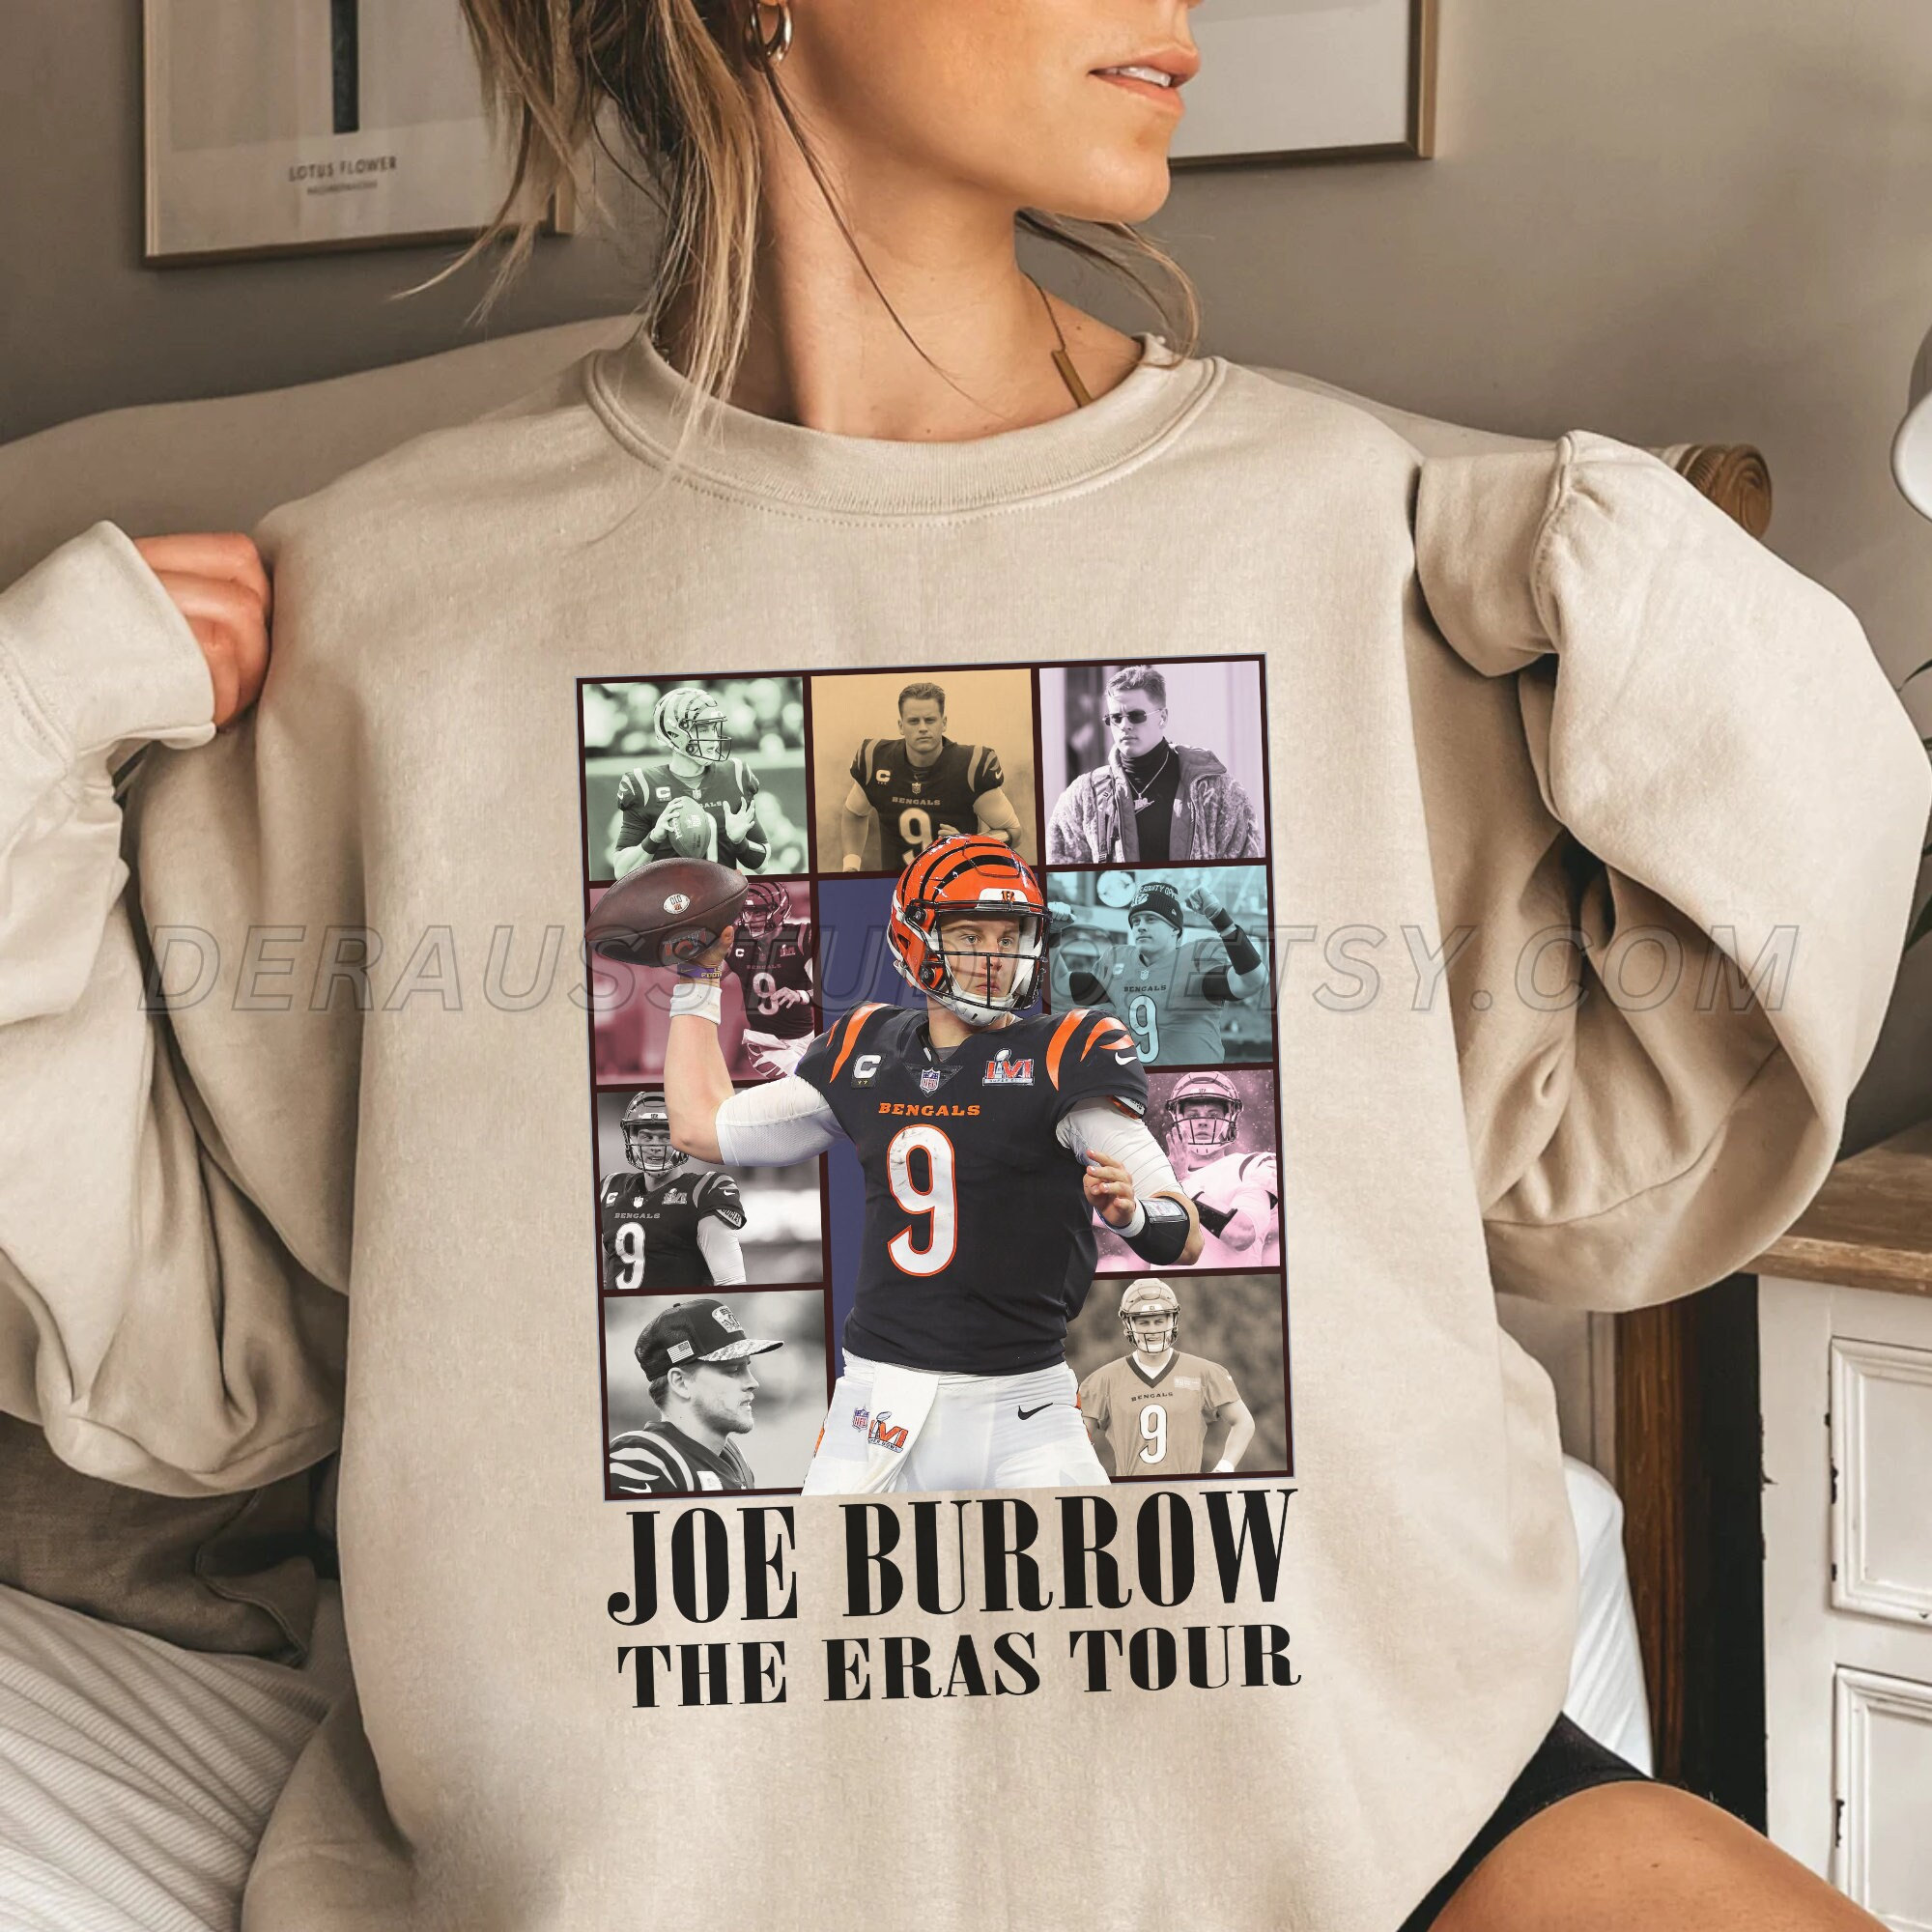 joe burrow jersey womens